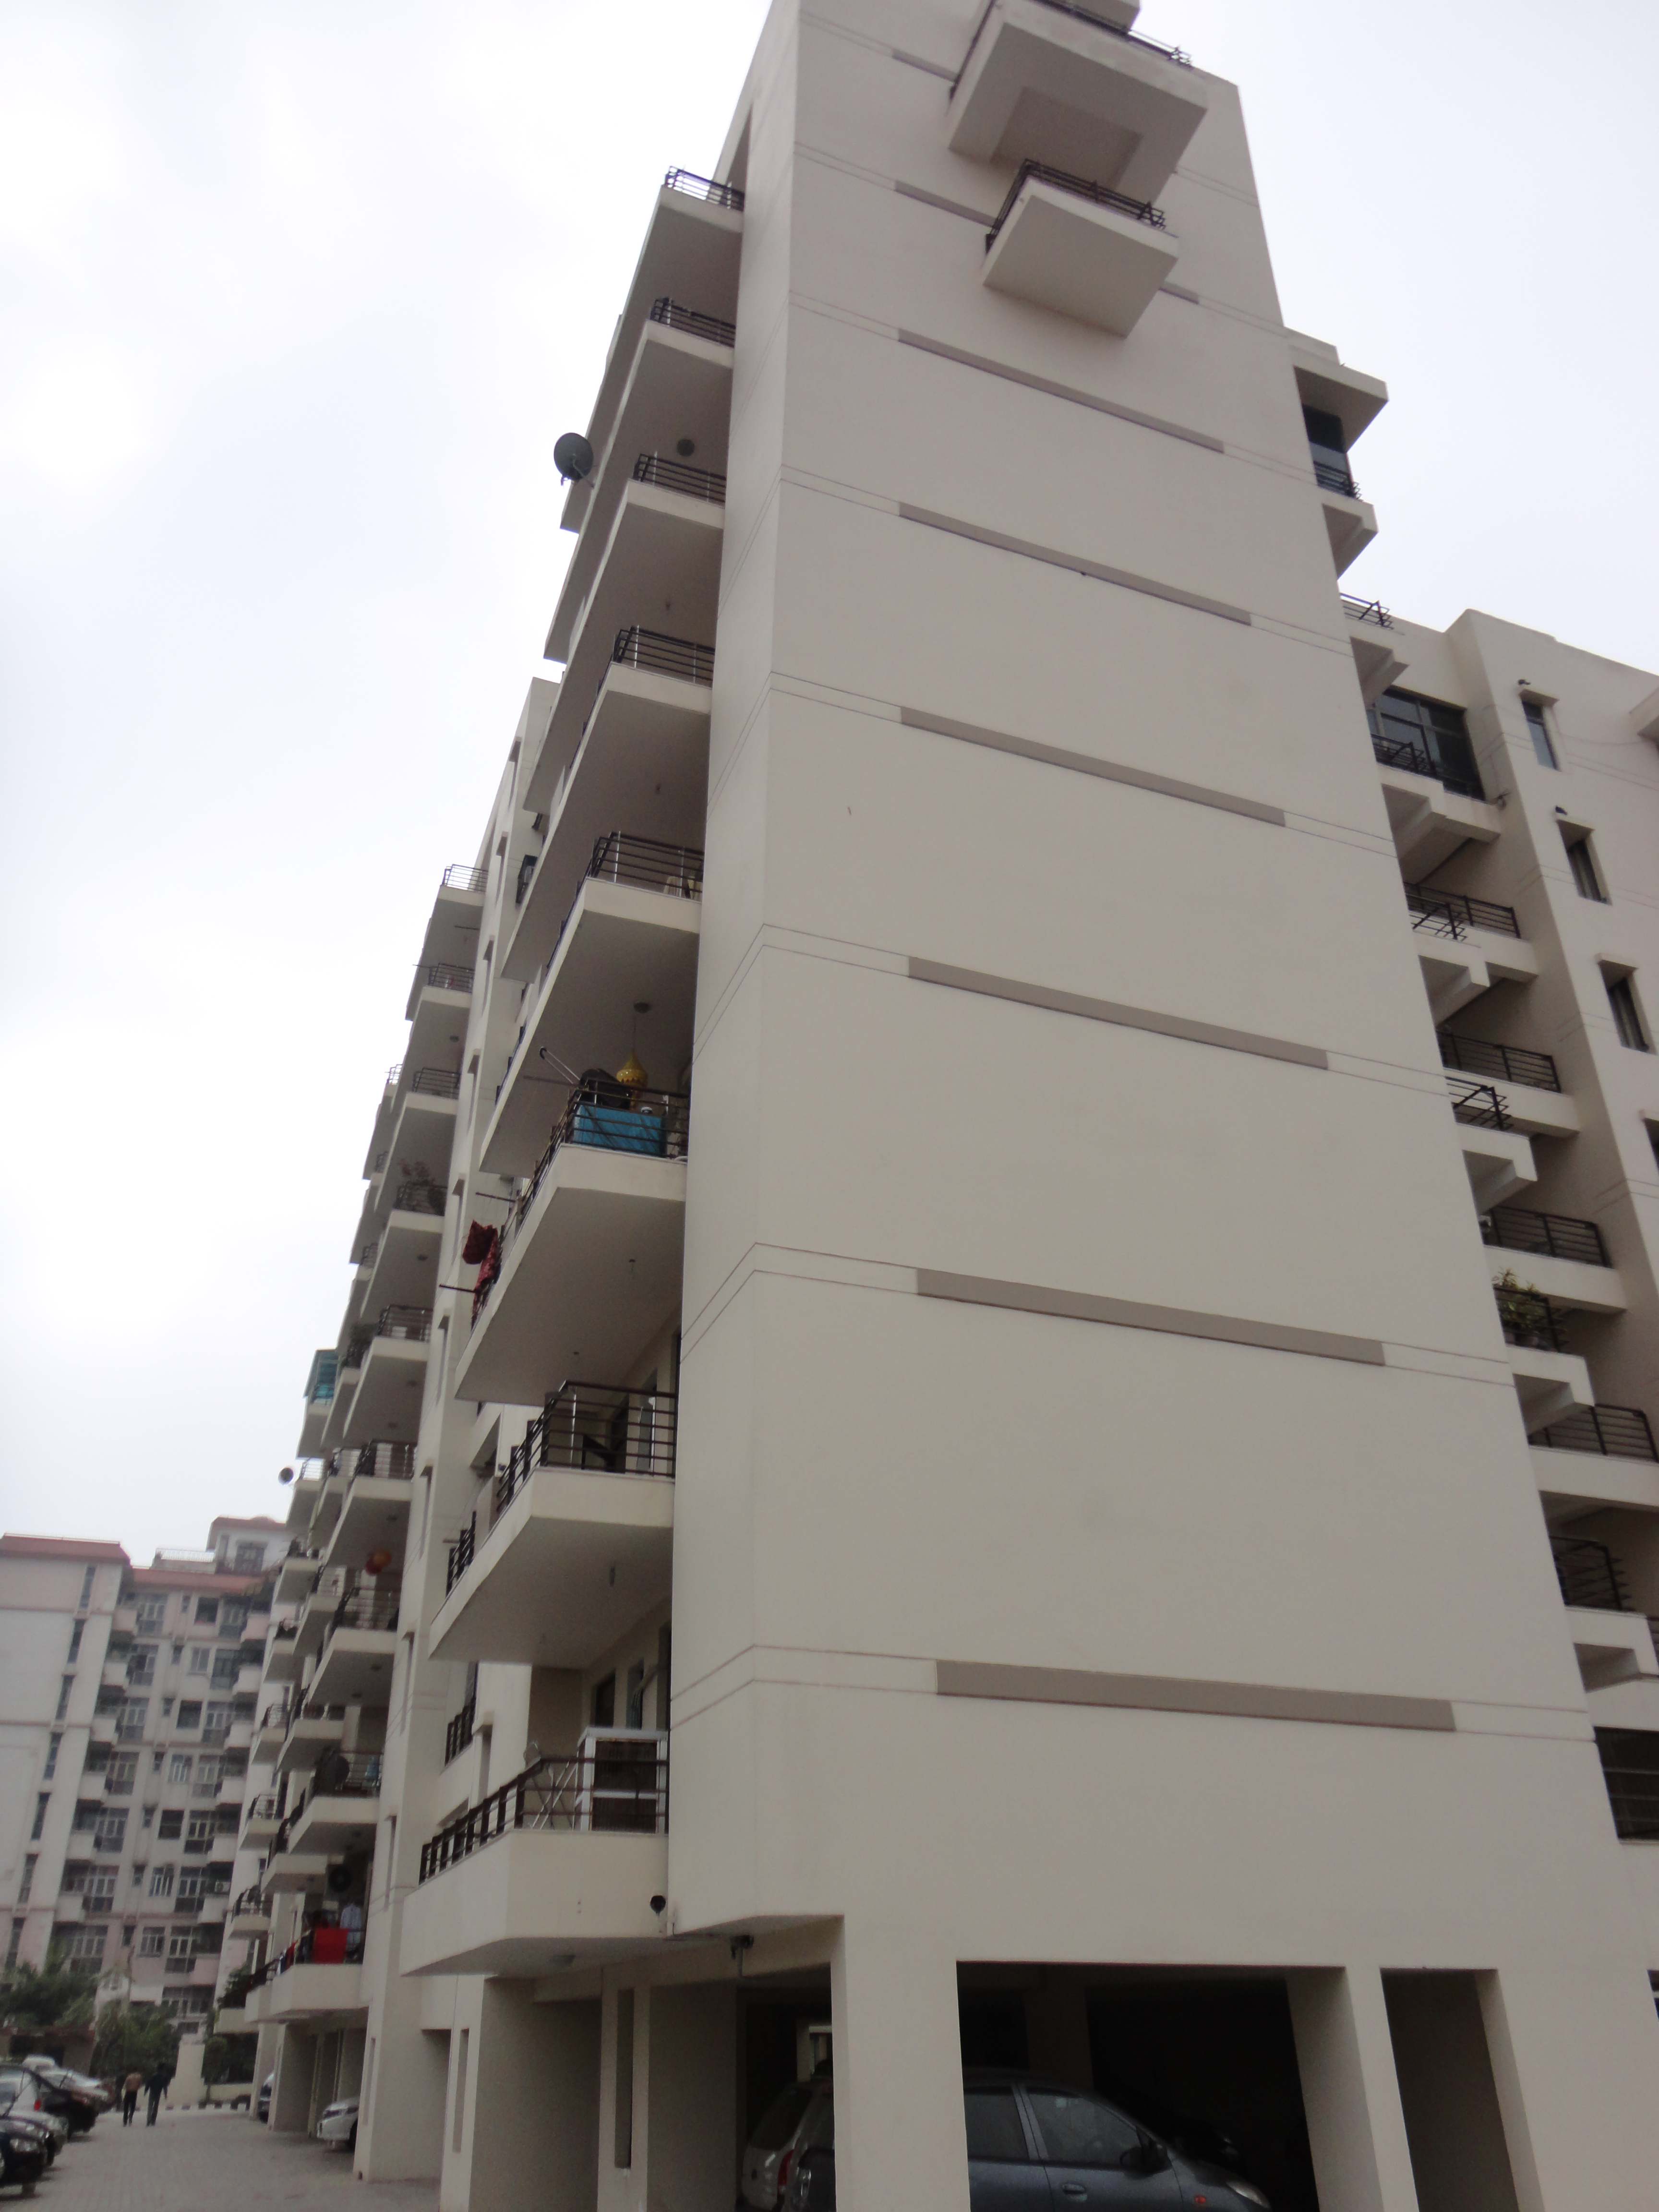 Shri Kirti Apartments CGHS Project Deails